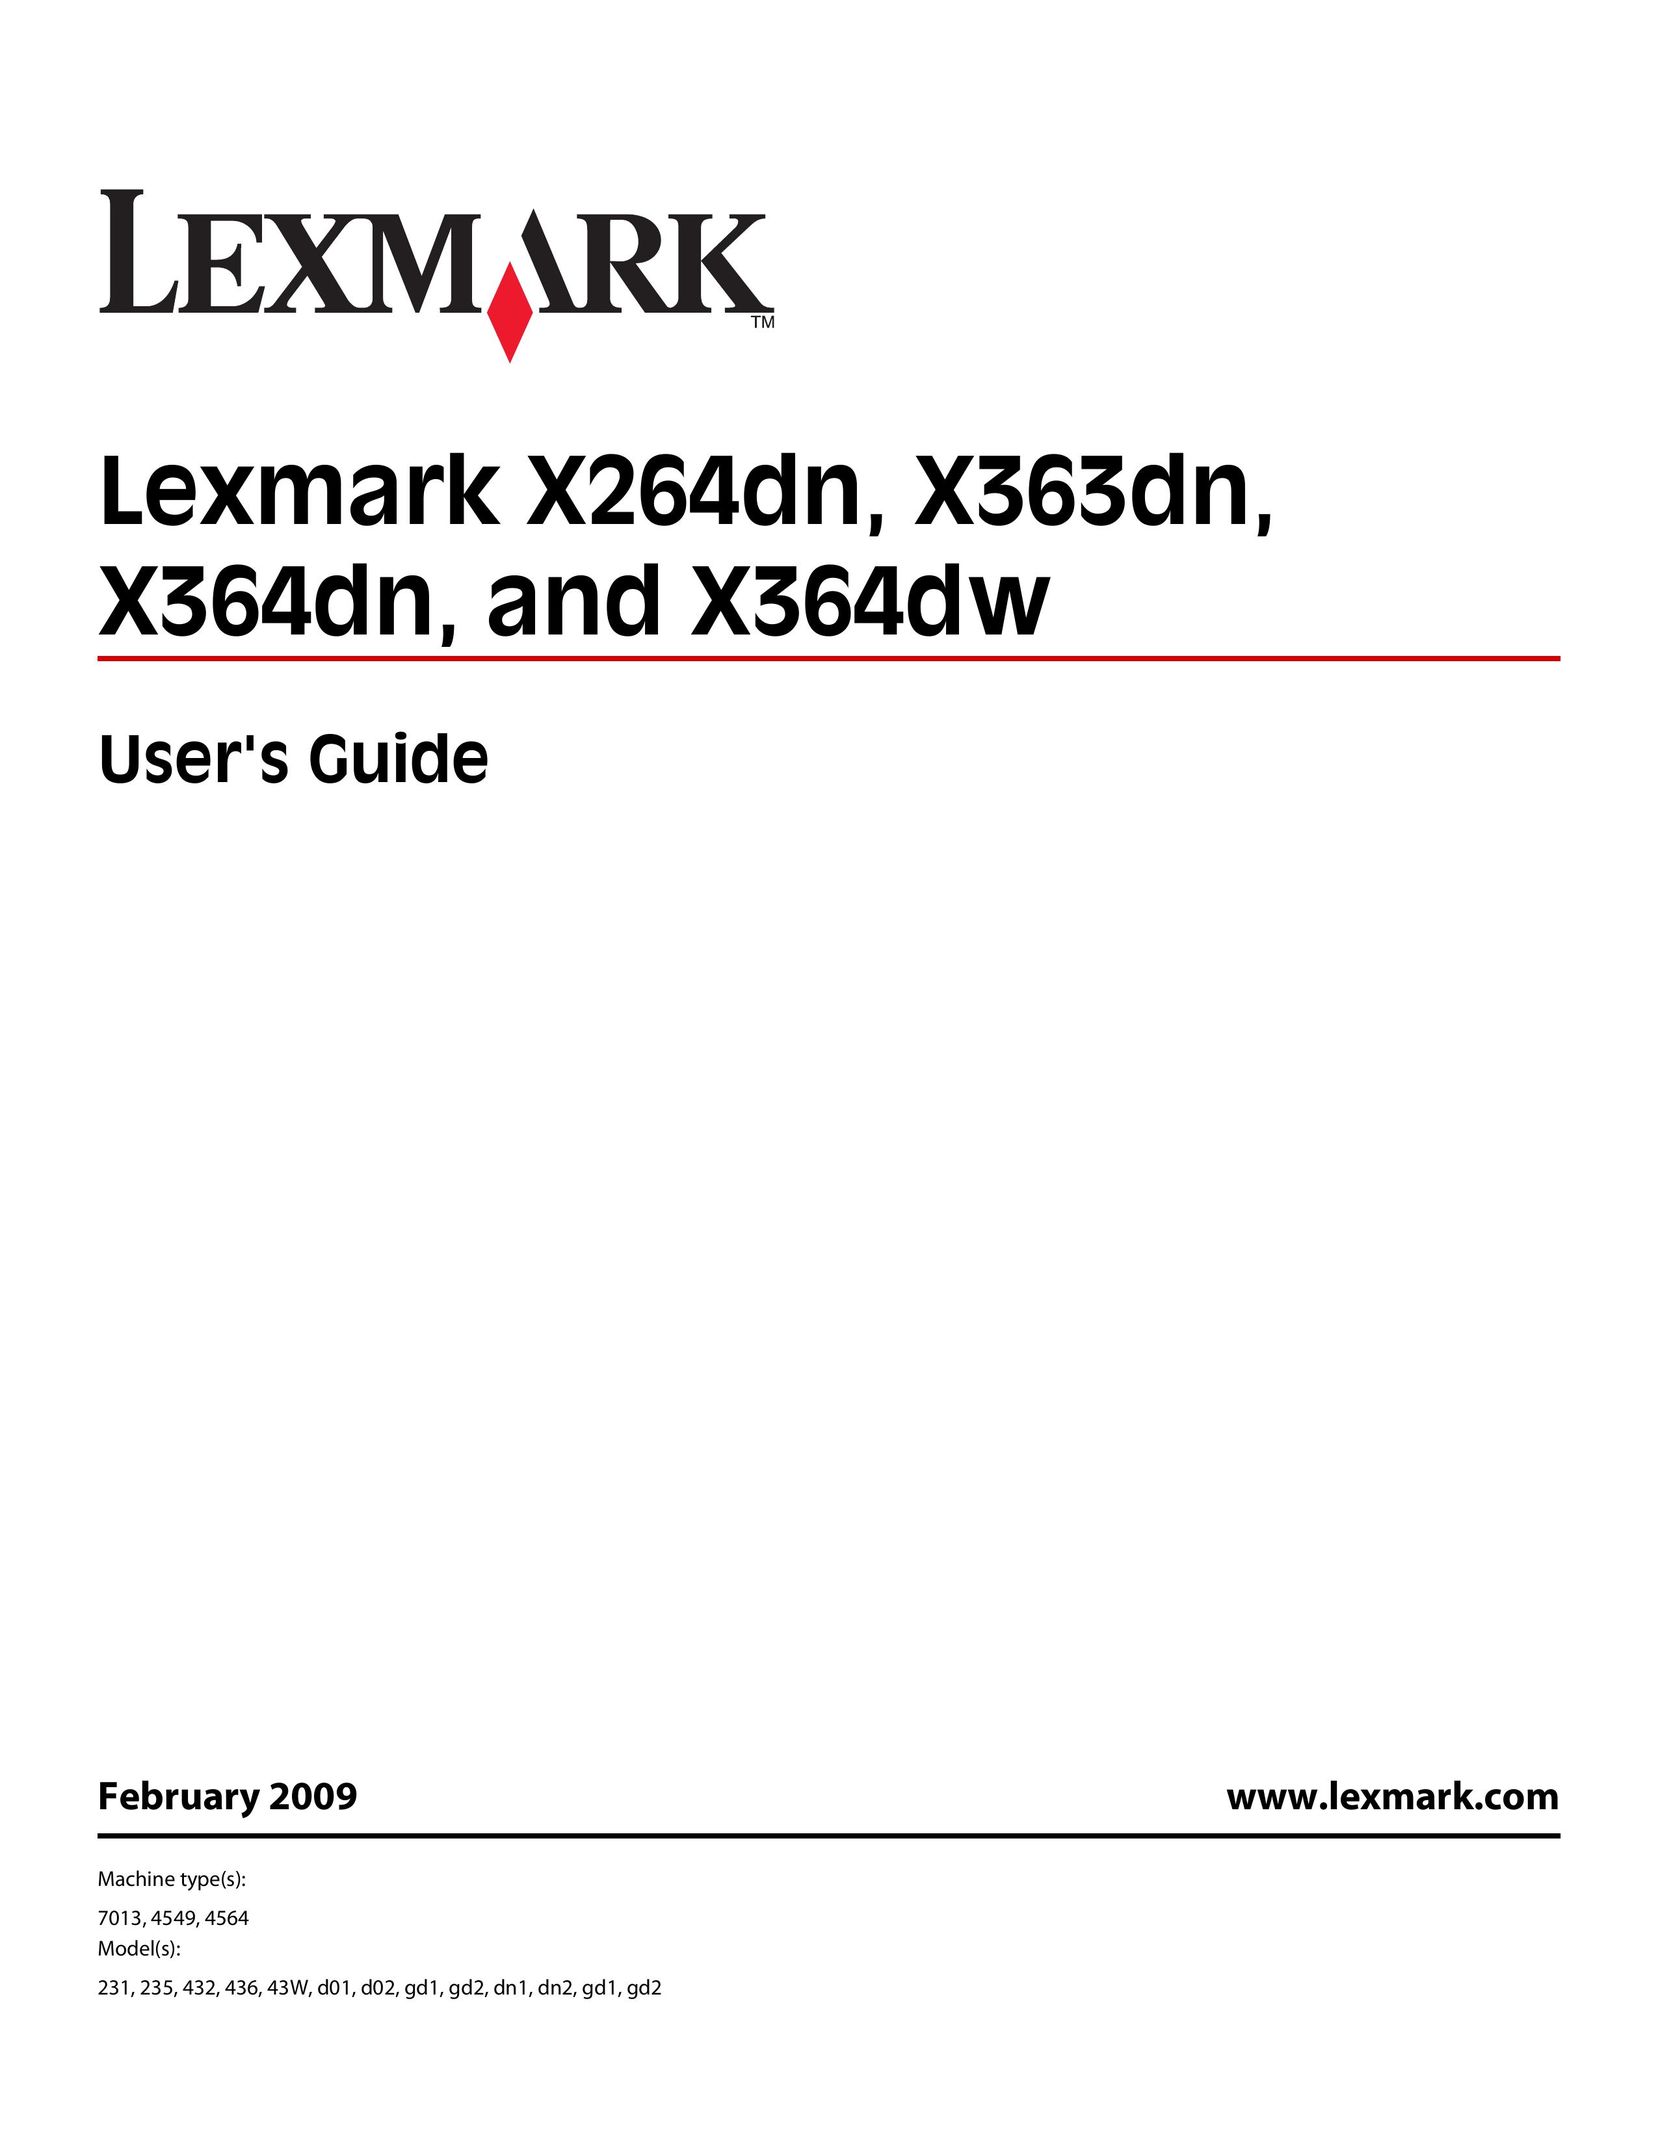 Lexmark 13B0502 All in One Printer User Manual